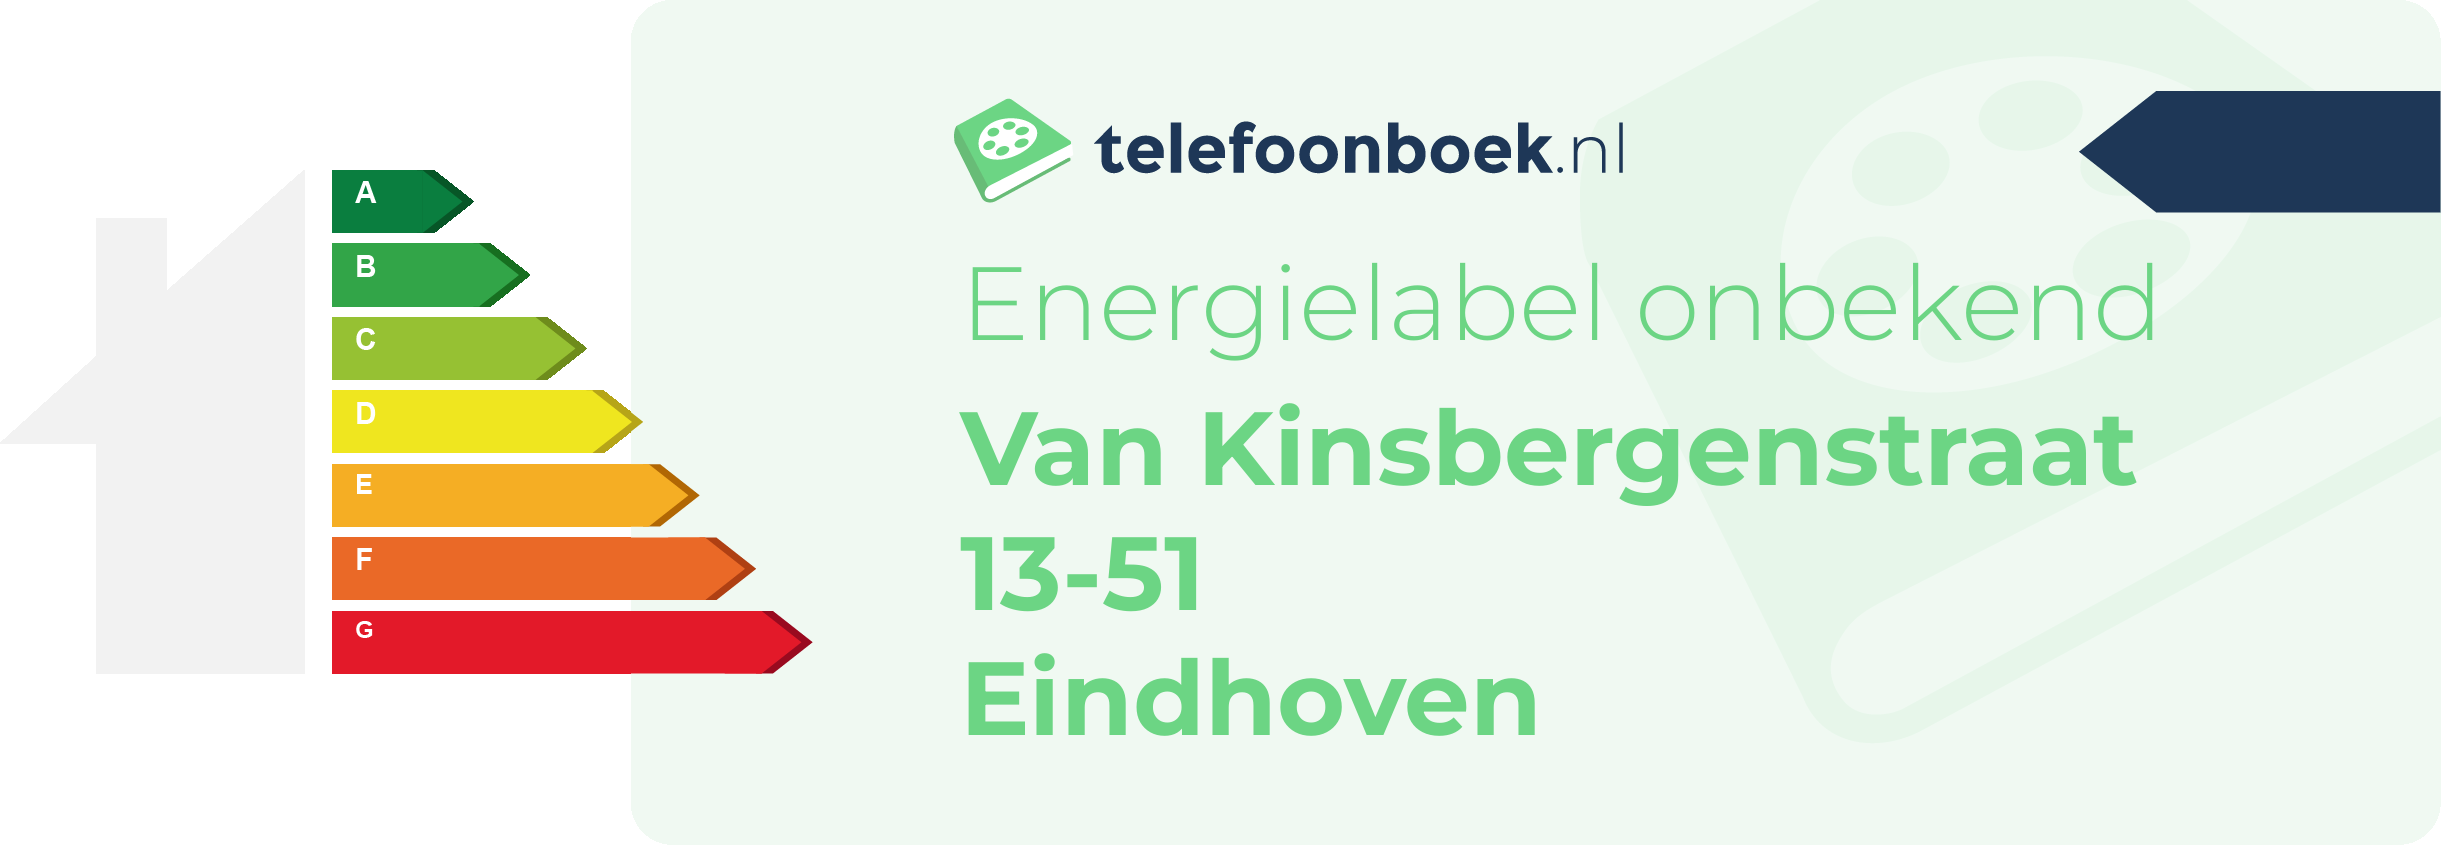 Energielabel Van Kinsbergenstraat 13-51 Eindhoven